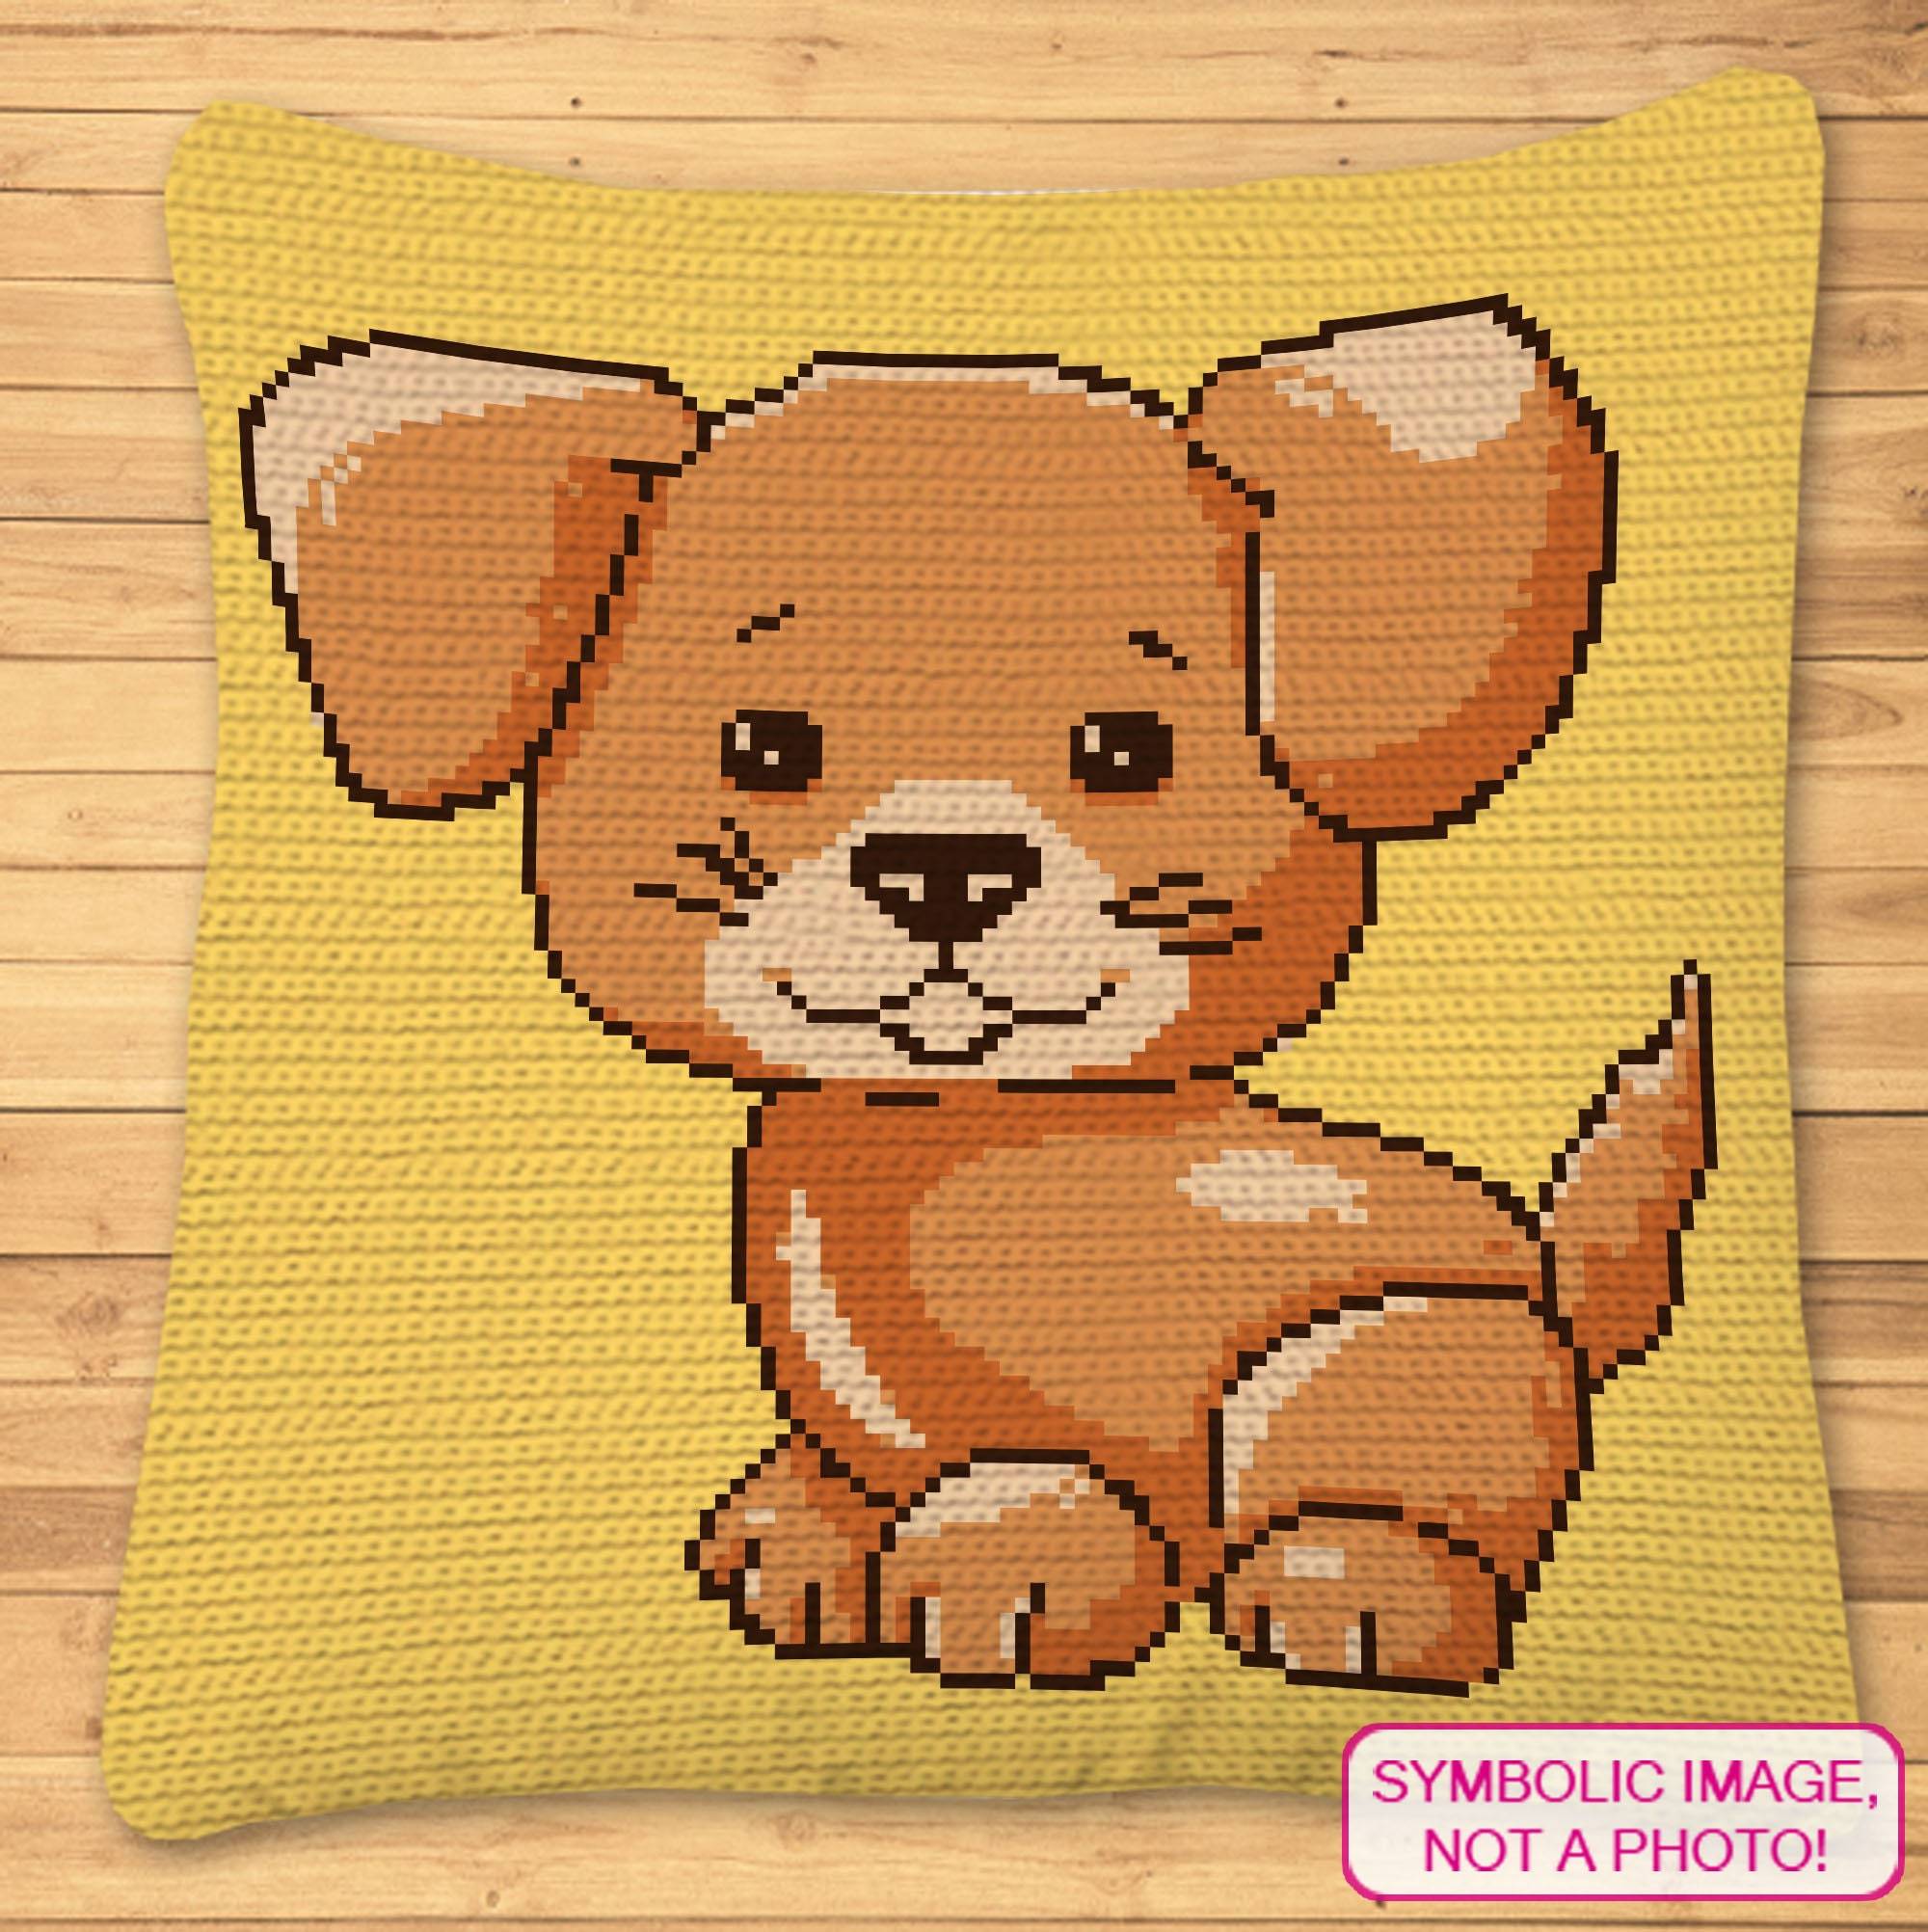 Tapestry Crochet Dog Blanket, Cute Puppy Crochet Pillow Pattern